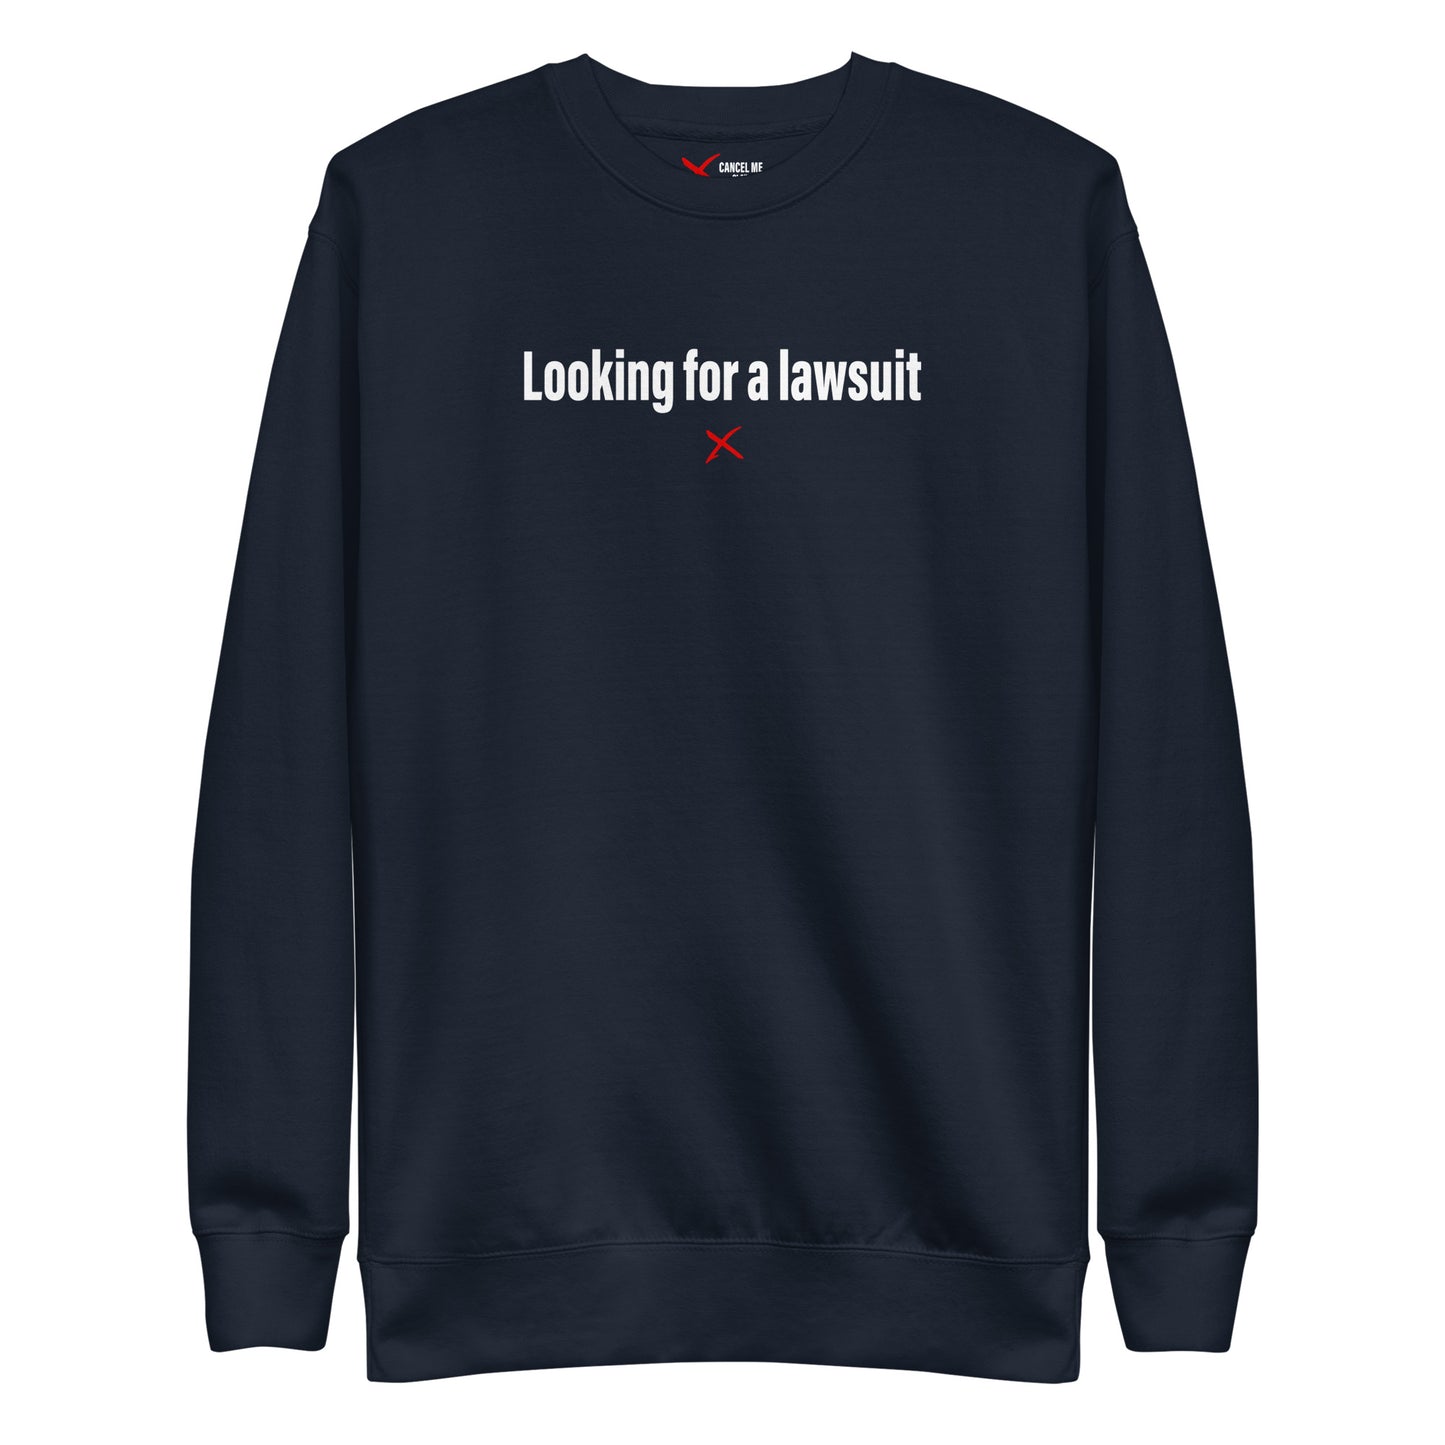 Looking for a lawsuit - Sweatshirt